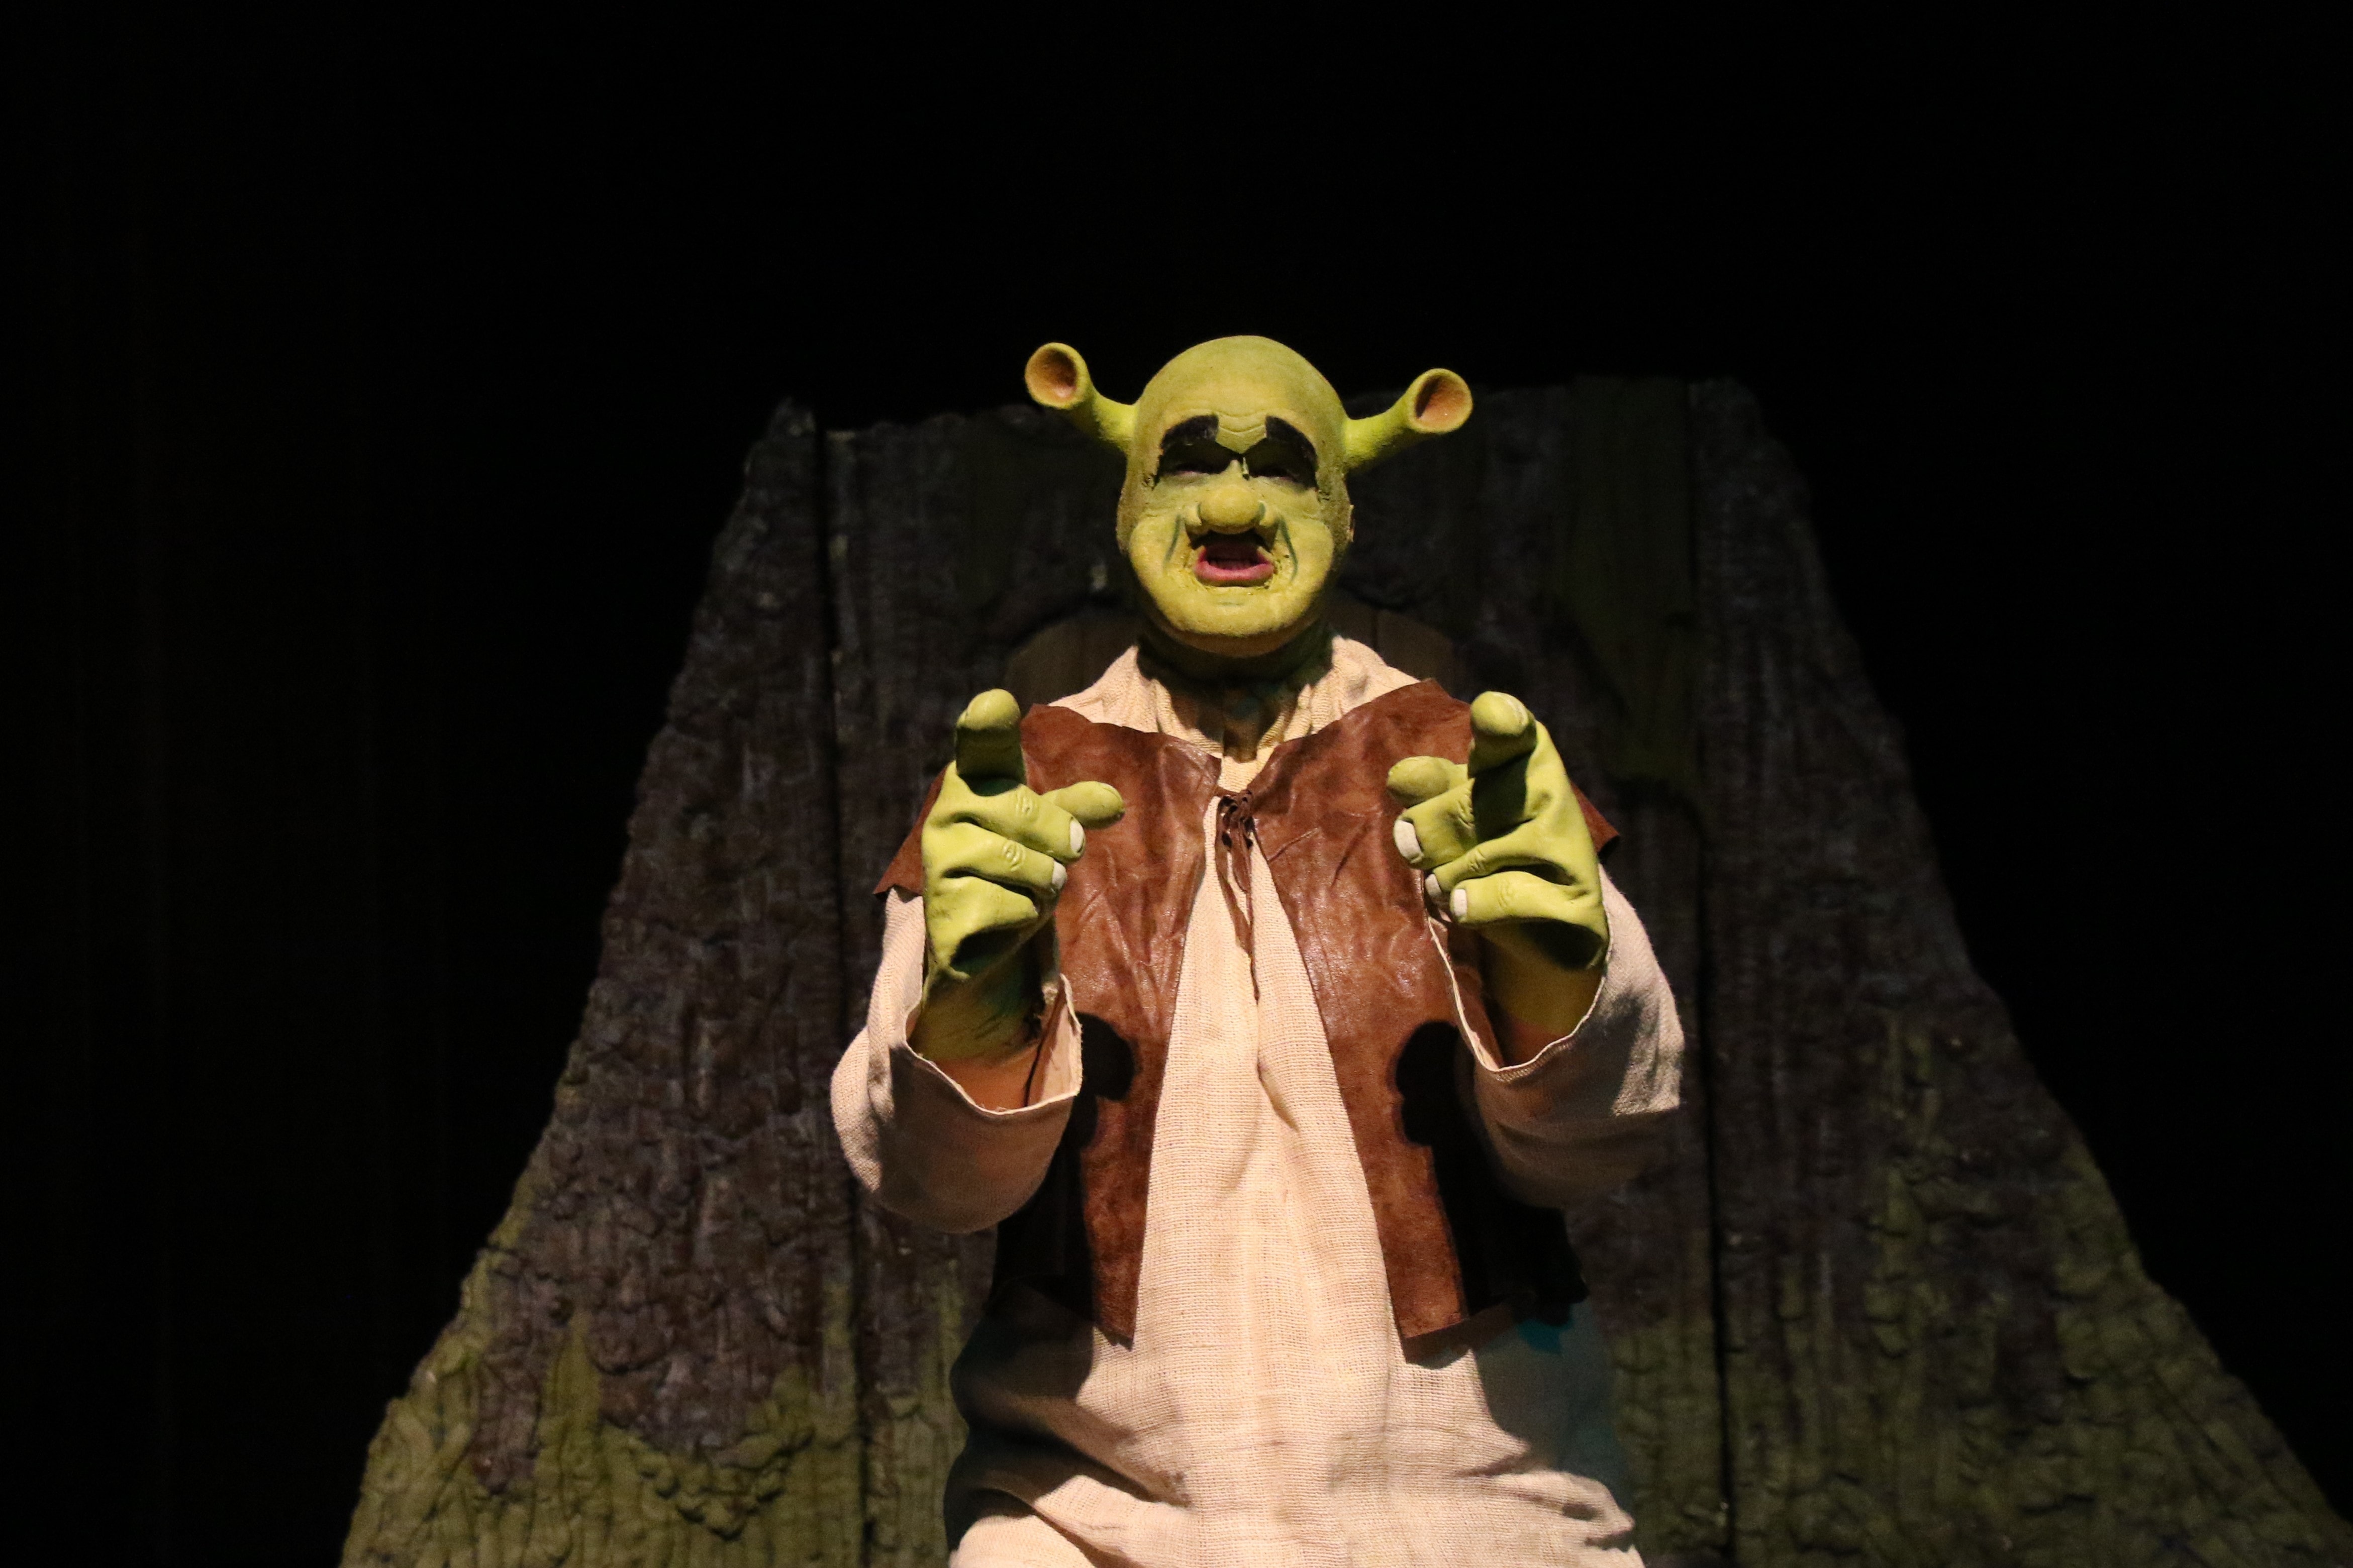 Dean Davis as Shrek in Charm City Players' production of Shrek the Musical. Photo by Shealyn Jae Photography.